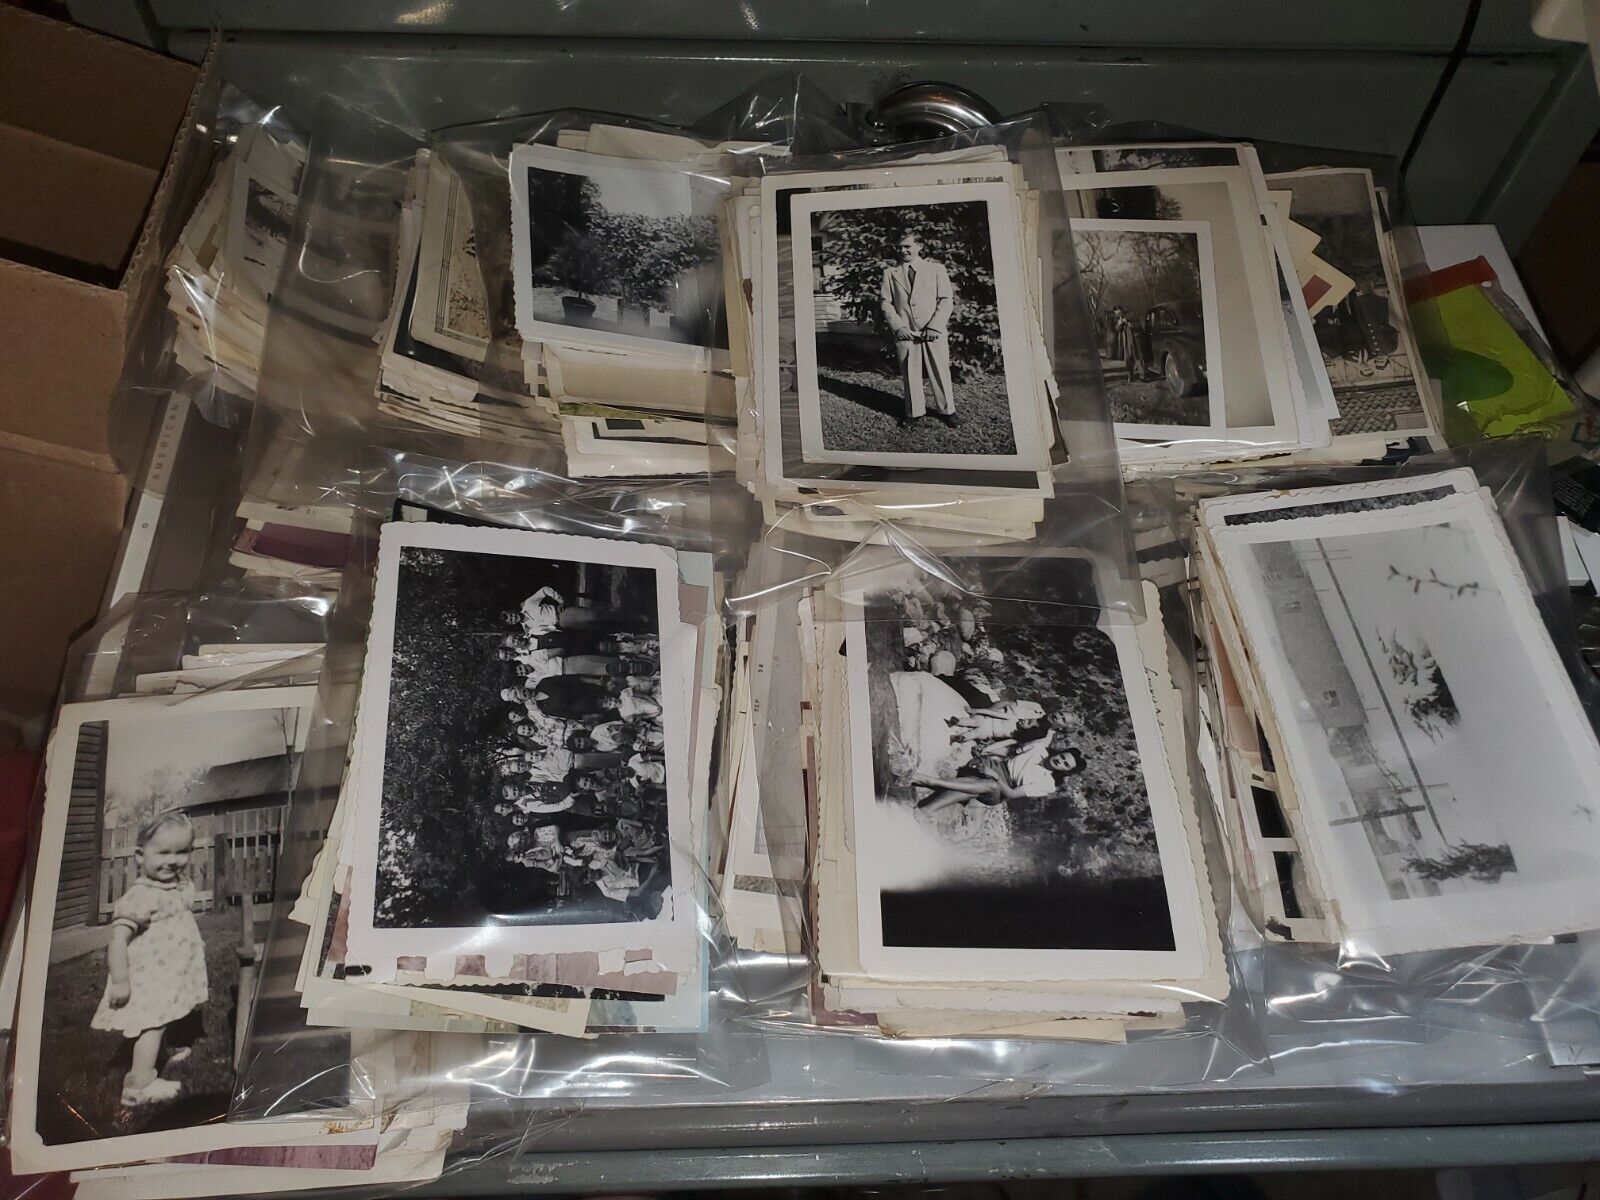 LOT OF 100 ORIGINAL RANDOM FOUND OLD PHOTOS MOSTLY B&W VINTAGE SNAPSHAPSHOTS 